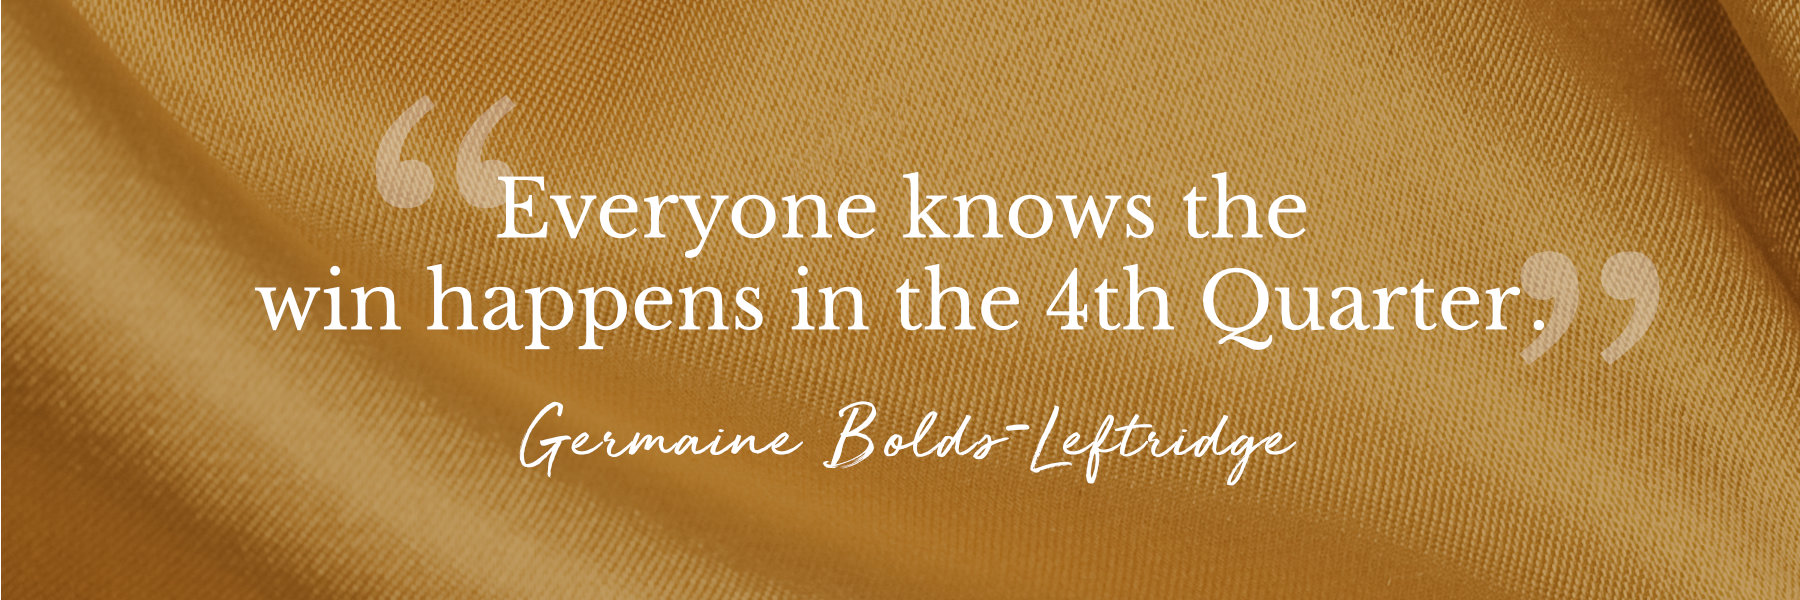 Germaine Bolds-Leftridge quote class=